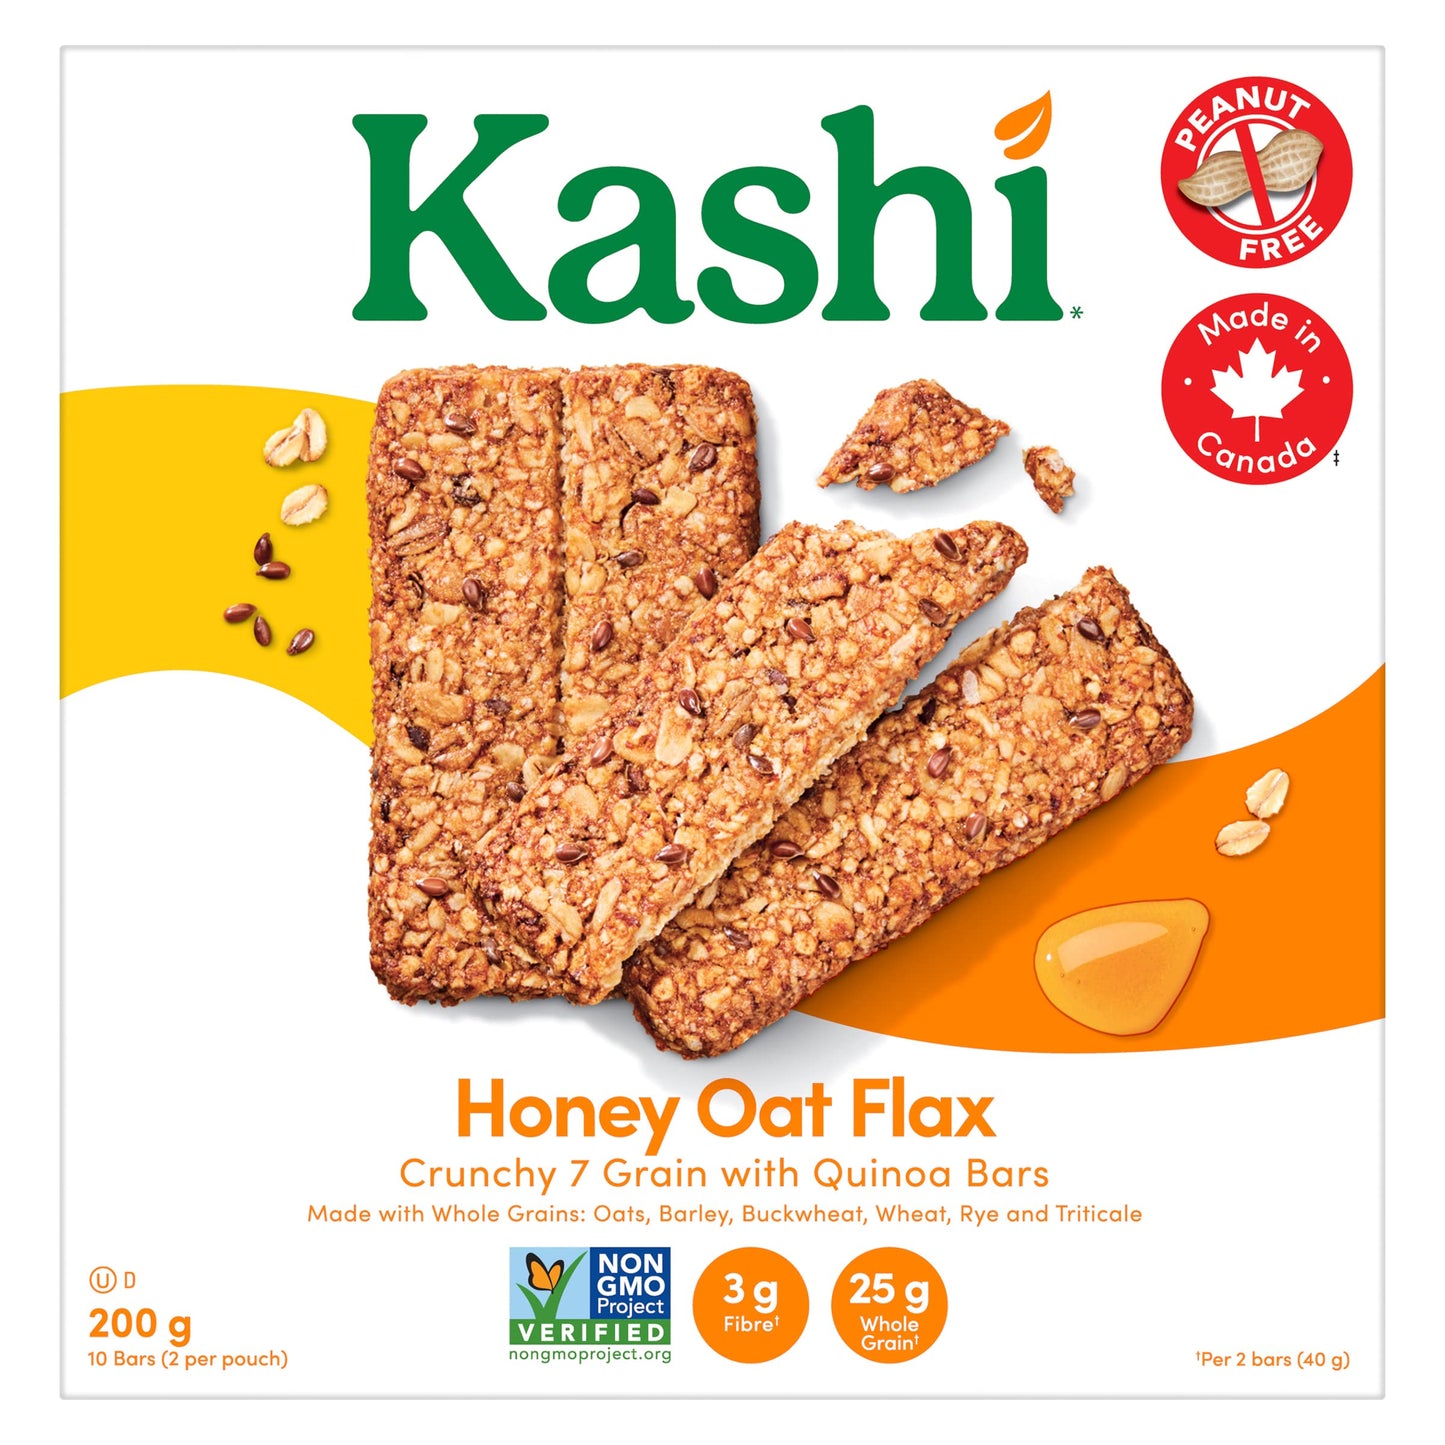 Kashi 7 Grain Honey Oat Flax with Quinoa Bars 1